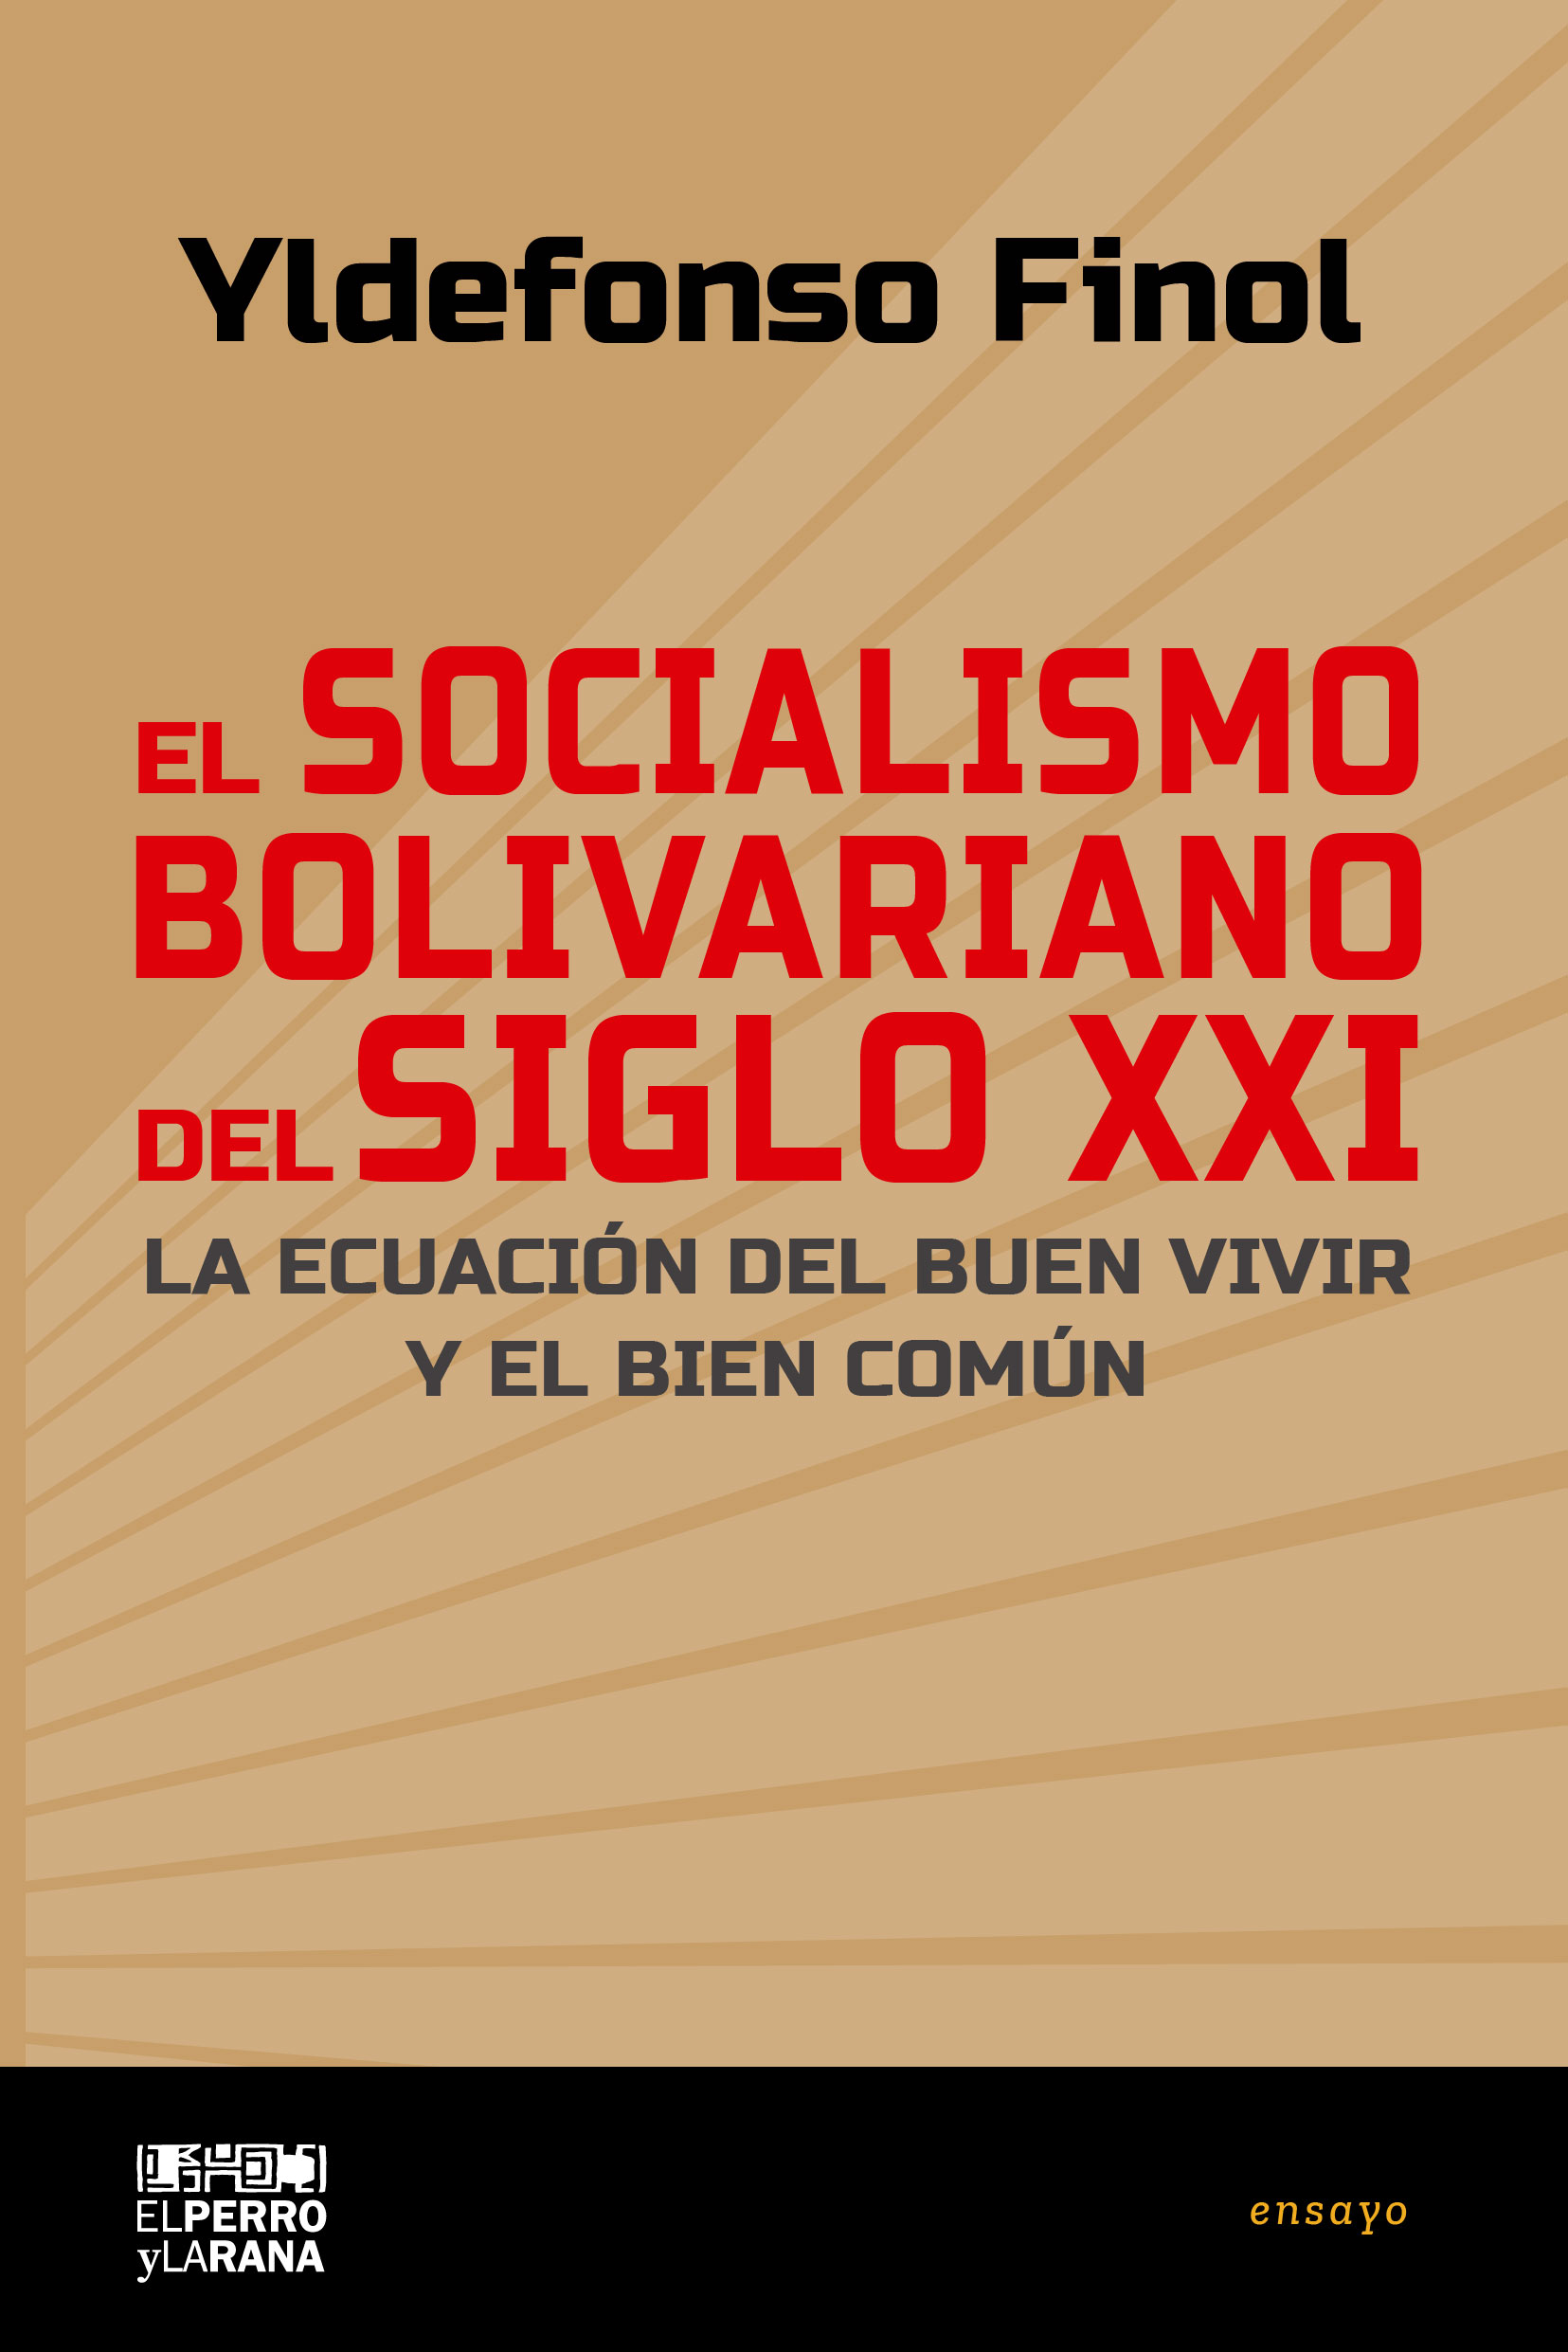 El socialismo bolivariano del siglo XXI